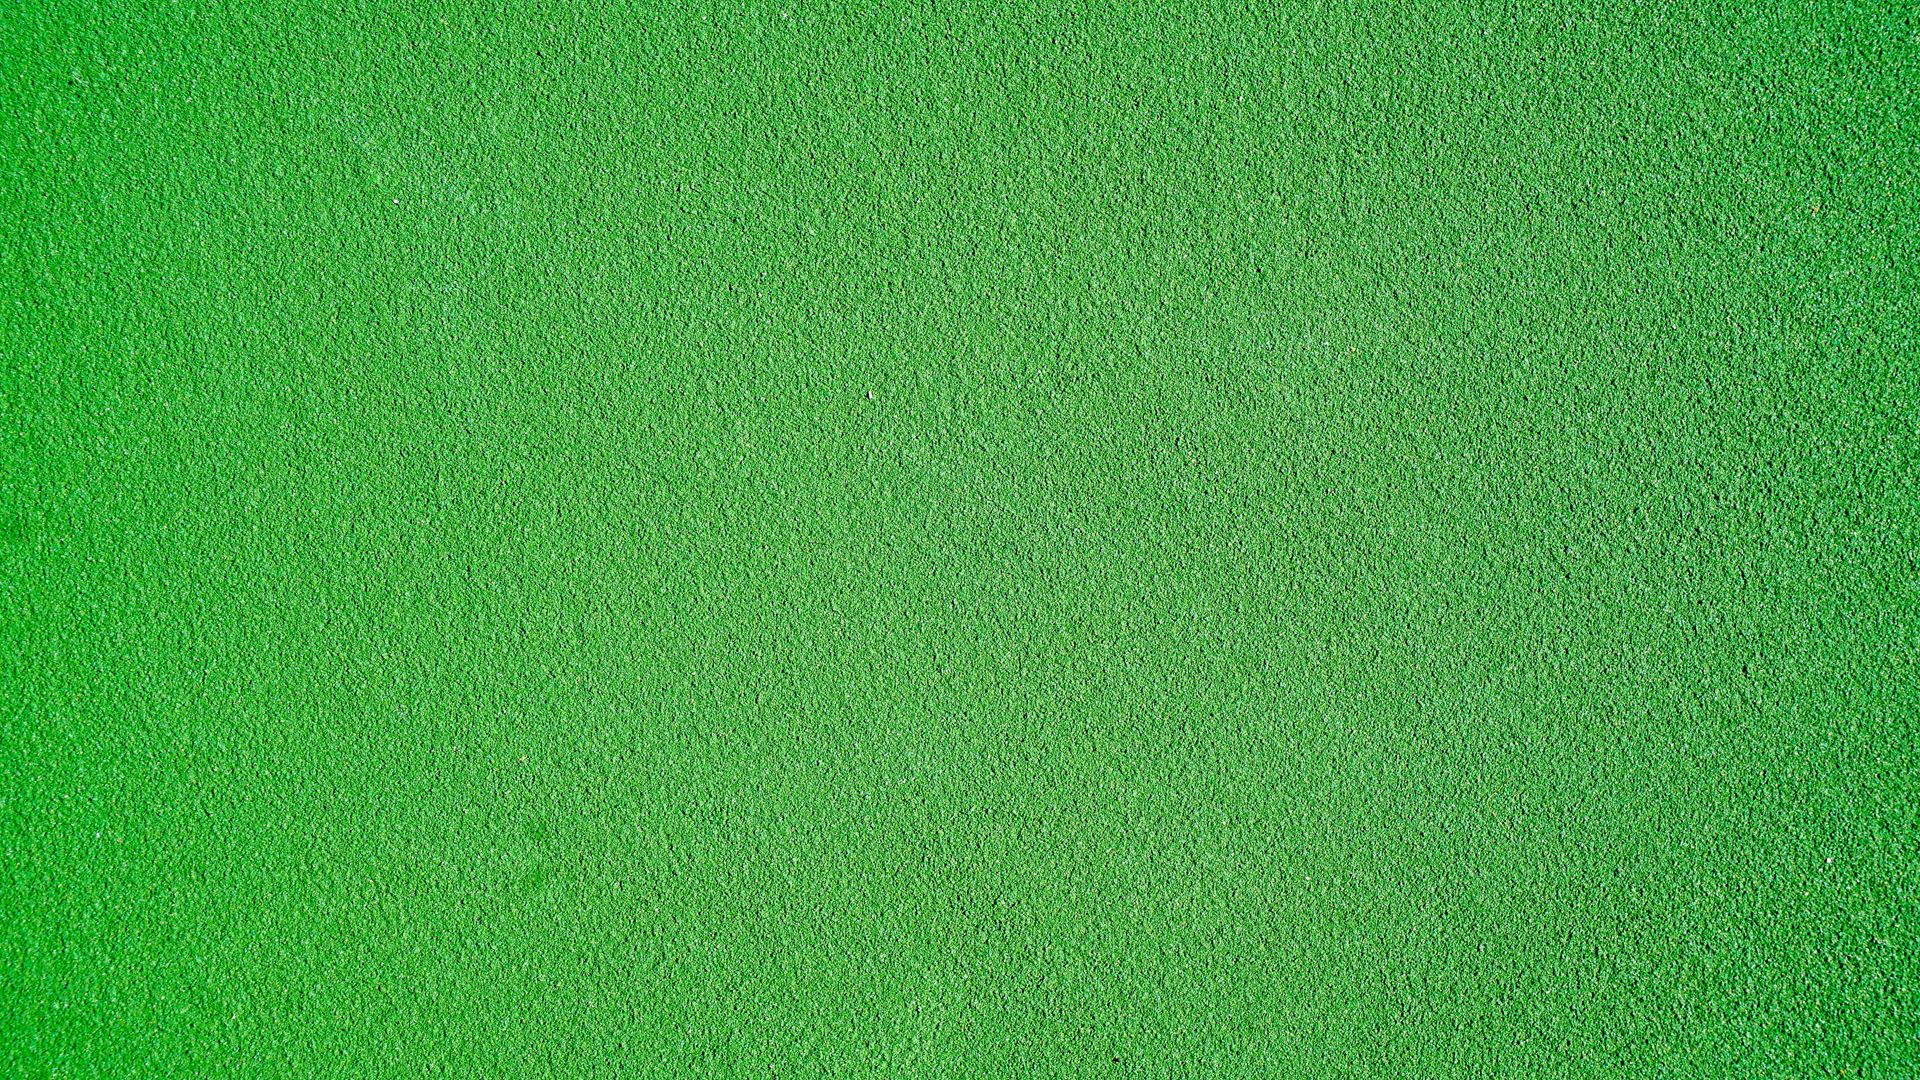 plain green